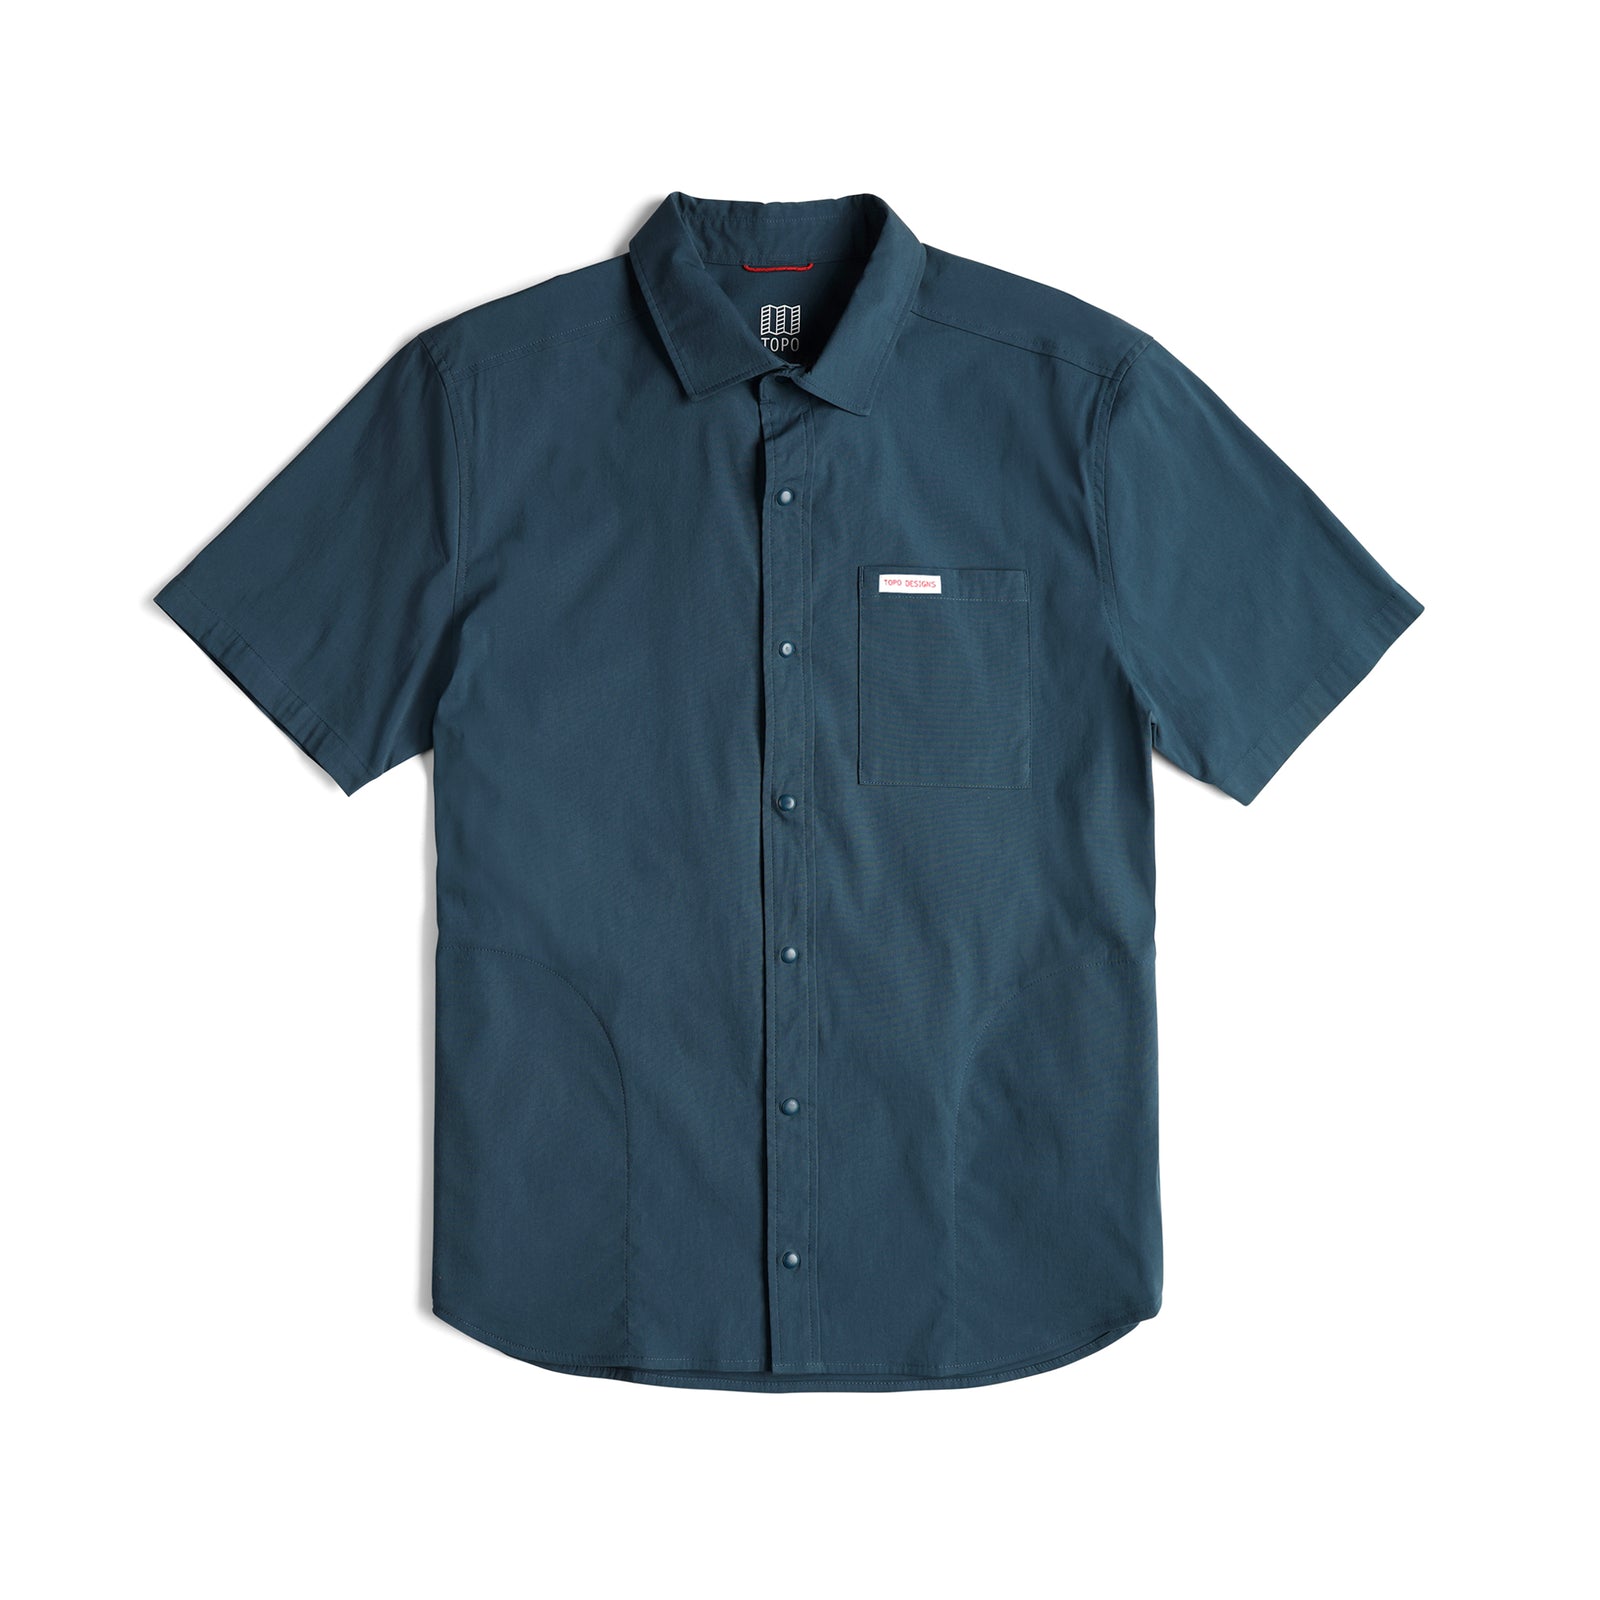 Topo Designs Global Shirt - Short Sleeve - Men's in "Pond Blue"